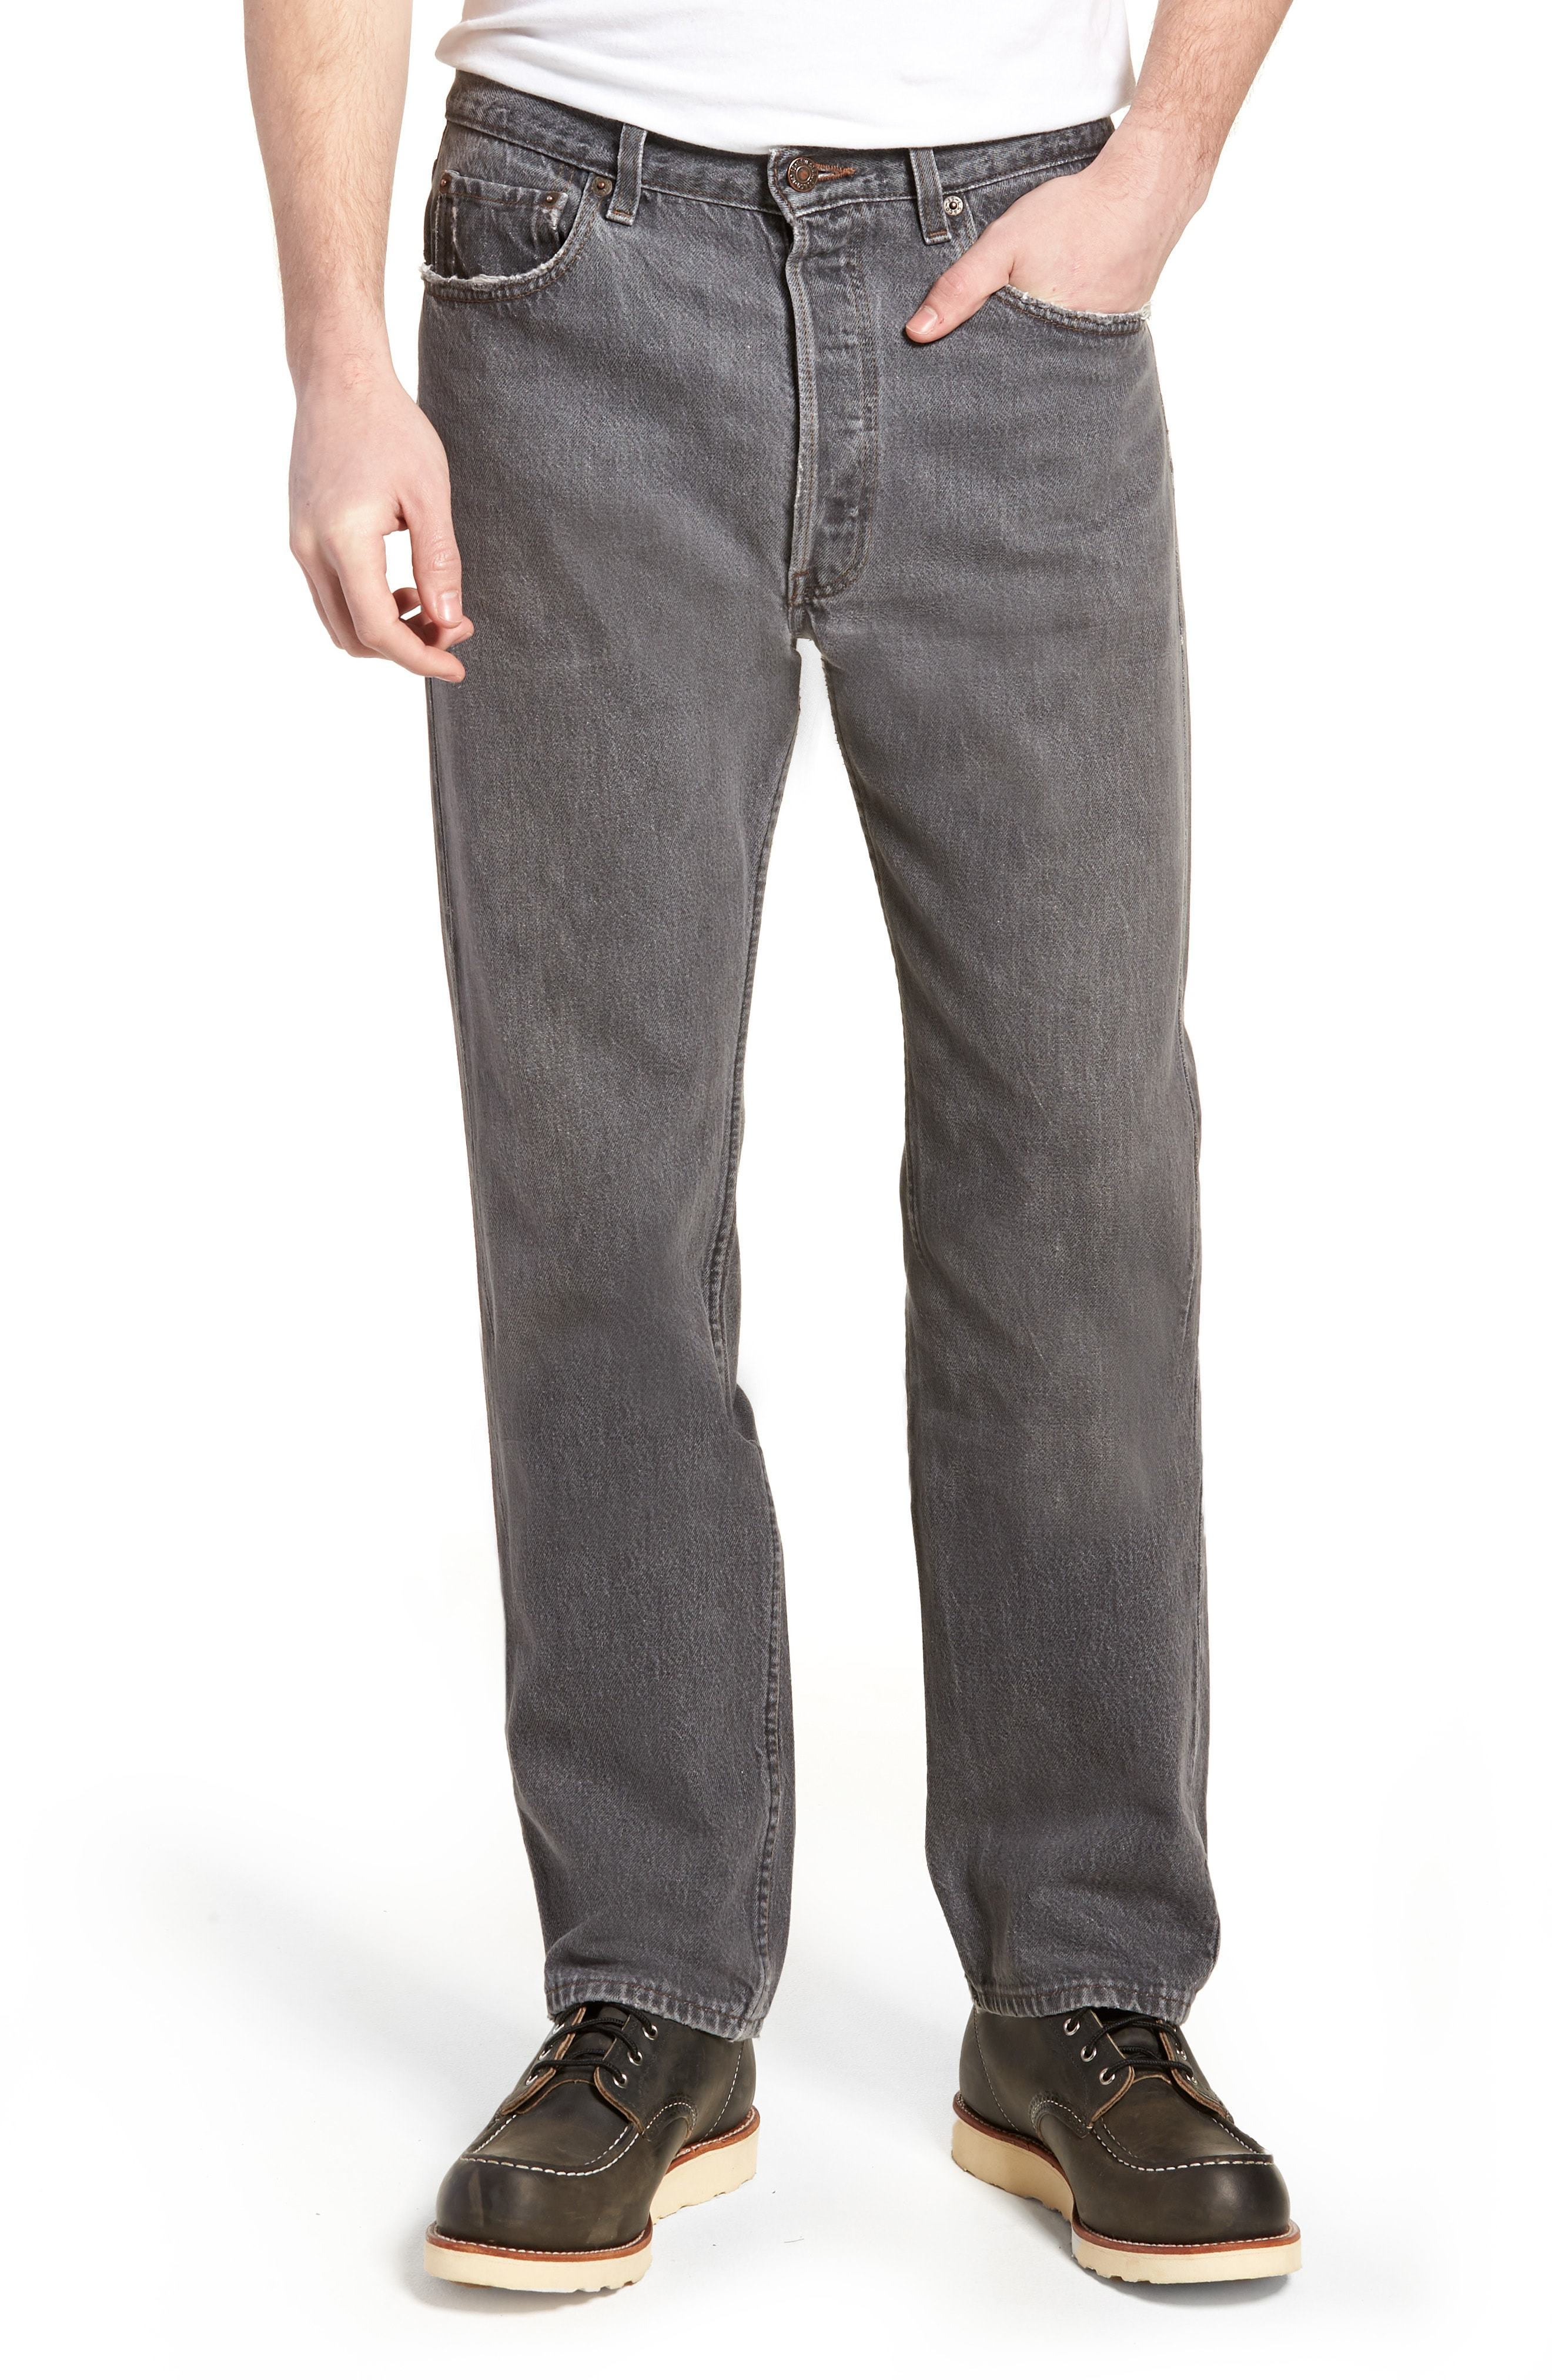 Levi's Authorized Vintage 501 Original Fit Jeans, $98 | Nordstrom |  Lookastic